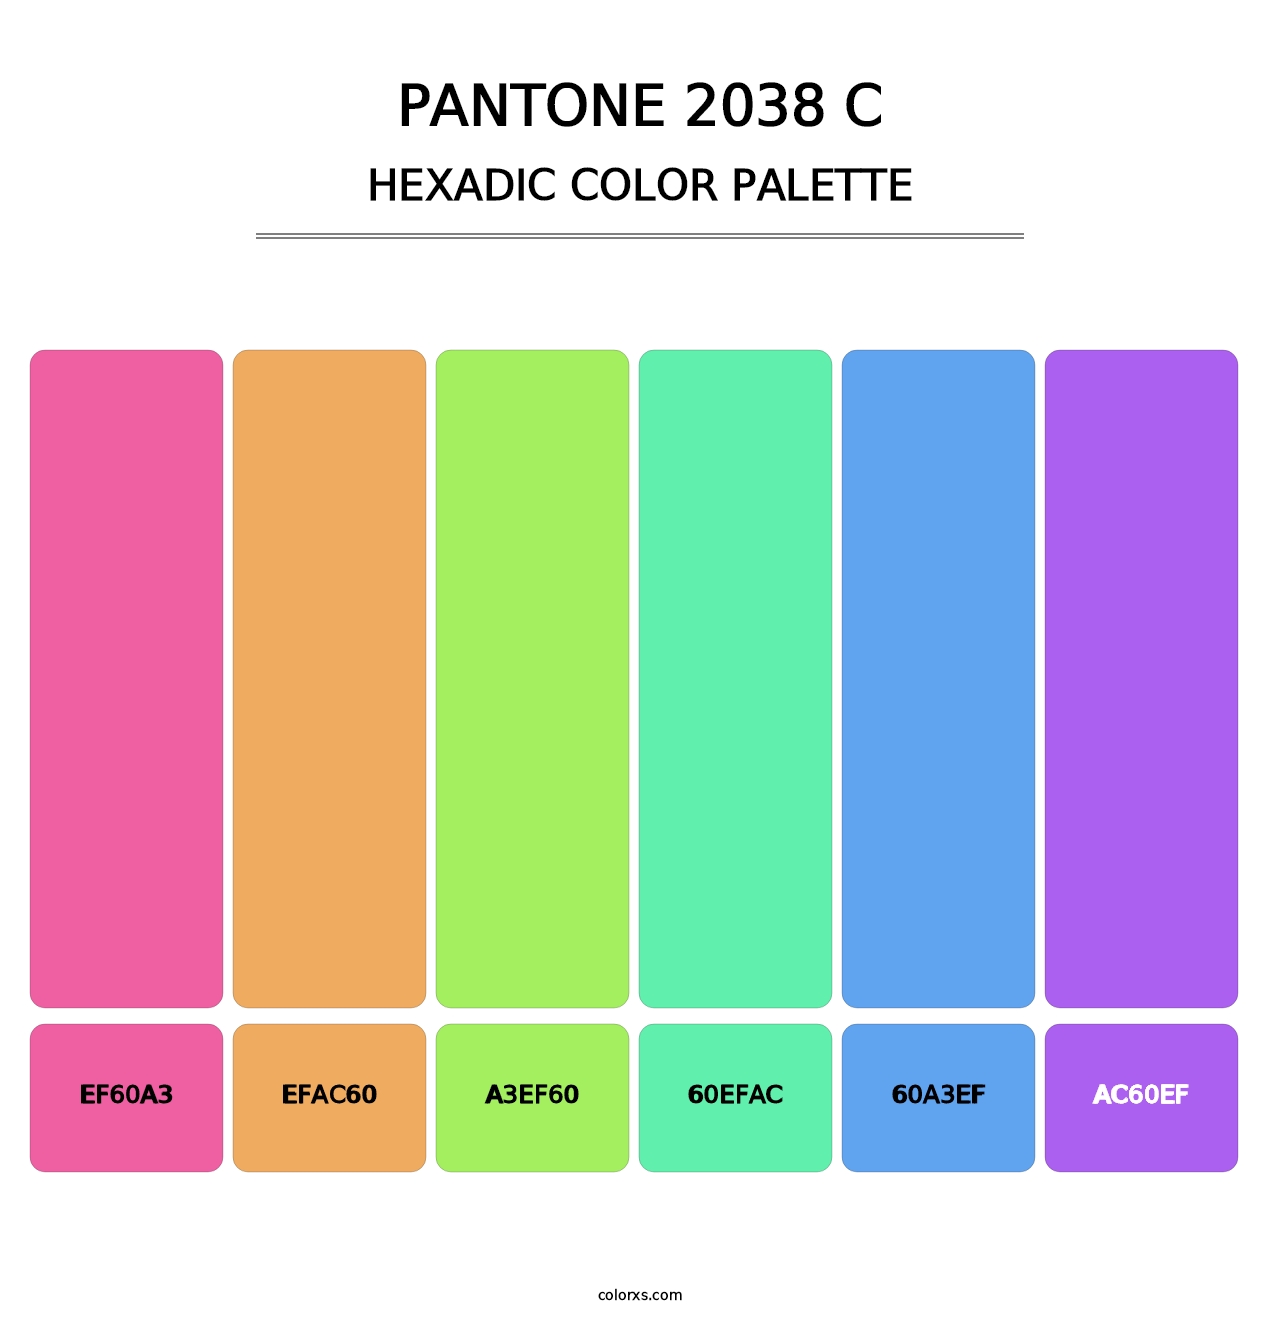 PANTONE 2038 C - Hexadic Color Palette